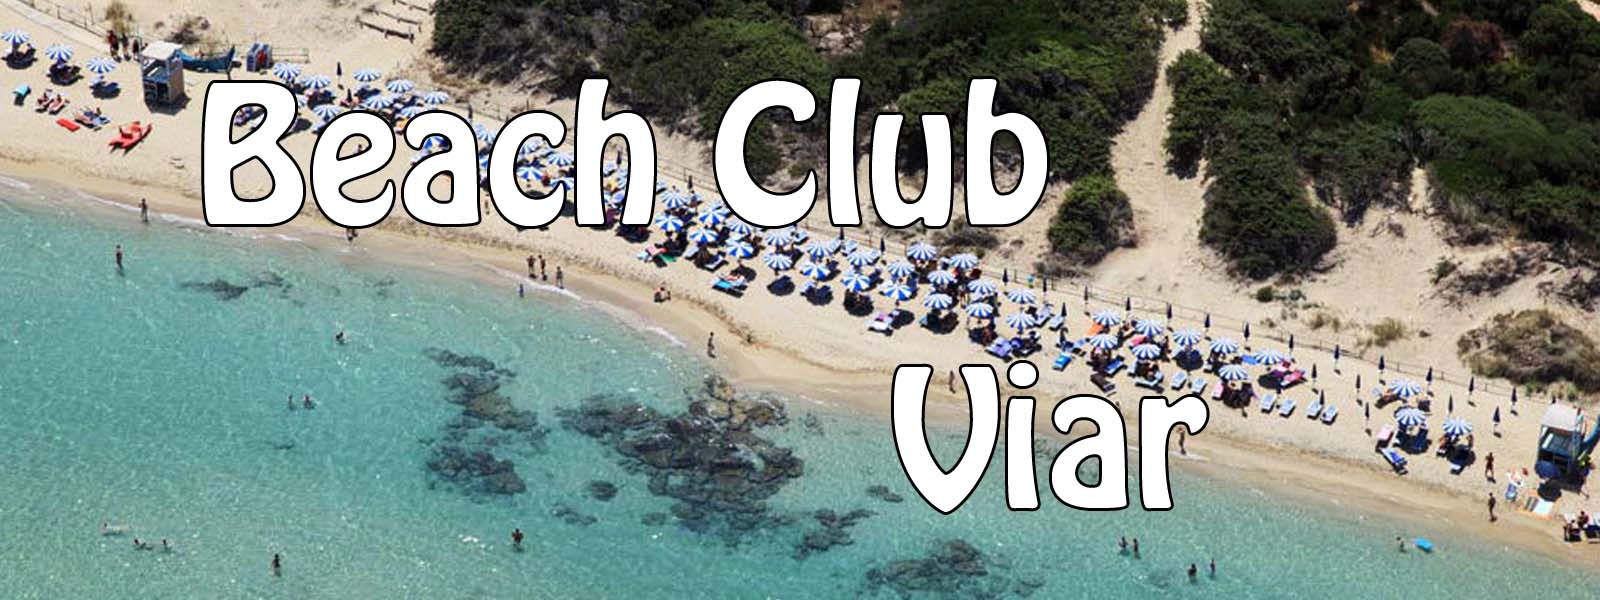 Viar Beach Club a Ostuni